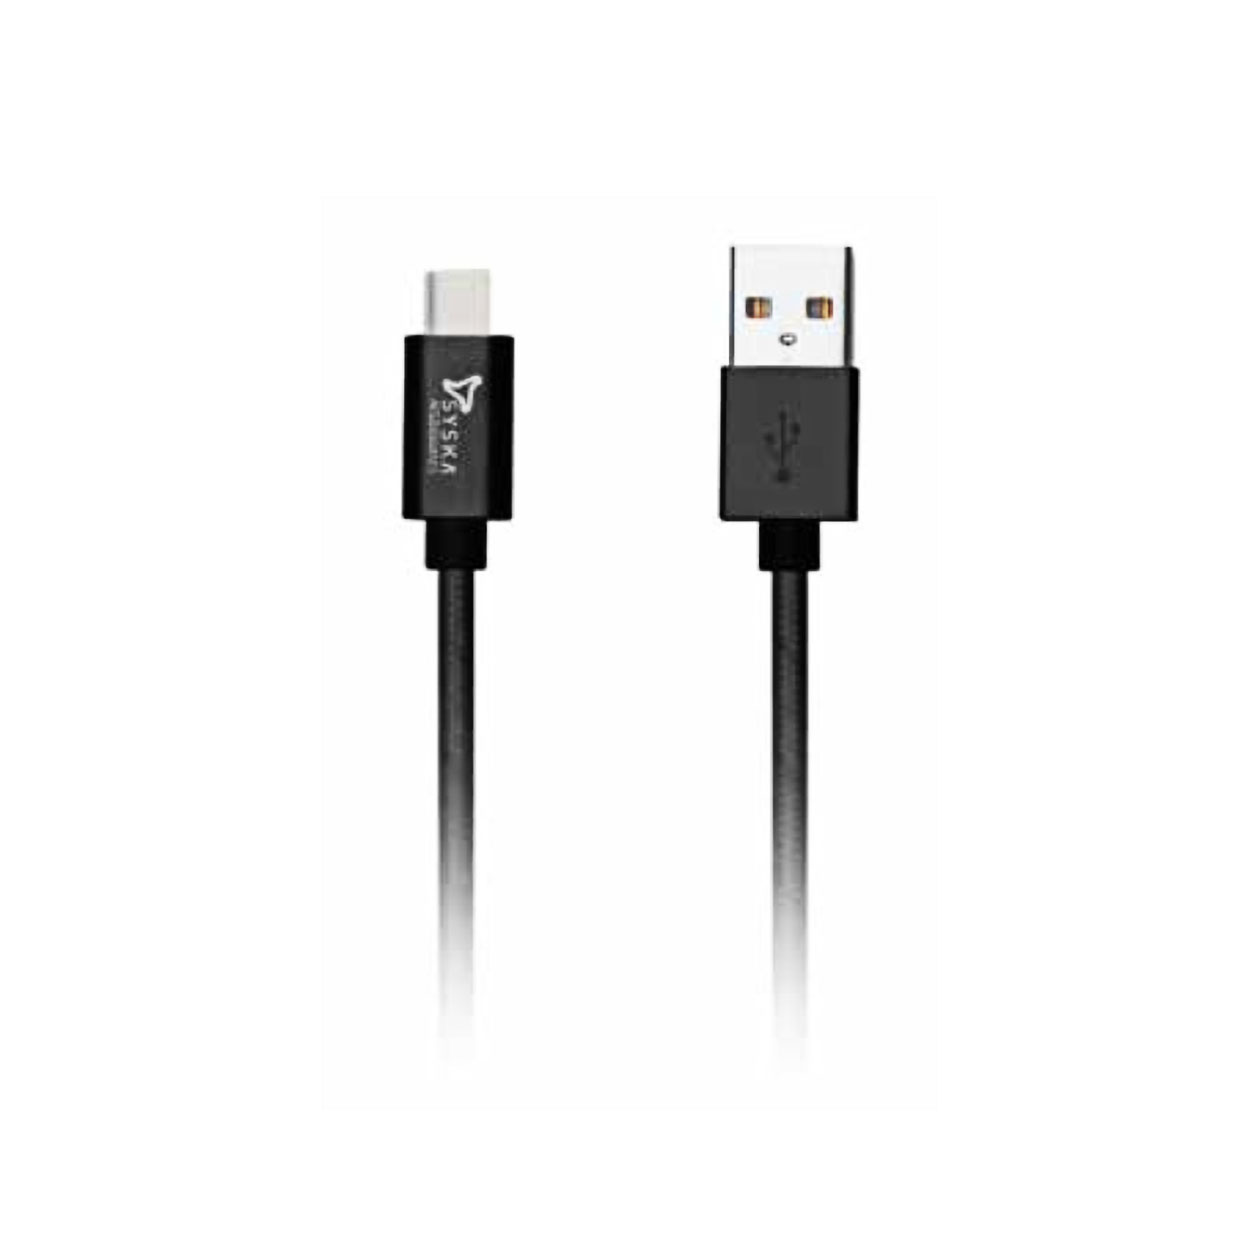 Syska CC14 USB-C to USB Cable